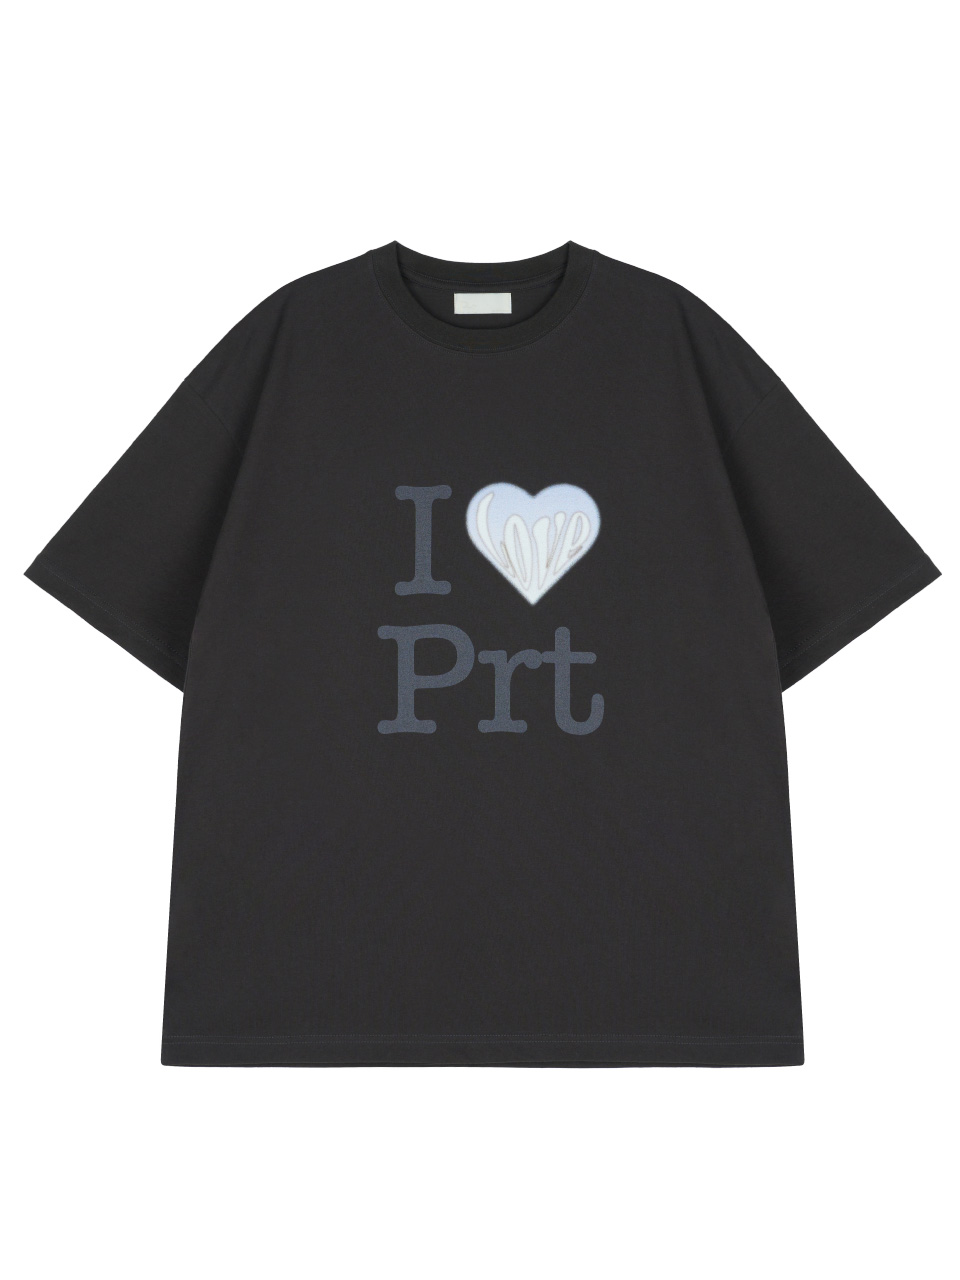 PRTPRT SHOP - I LOVE PRT T SHIRT (CHARCOAL)